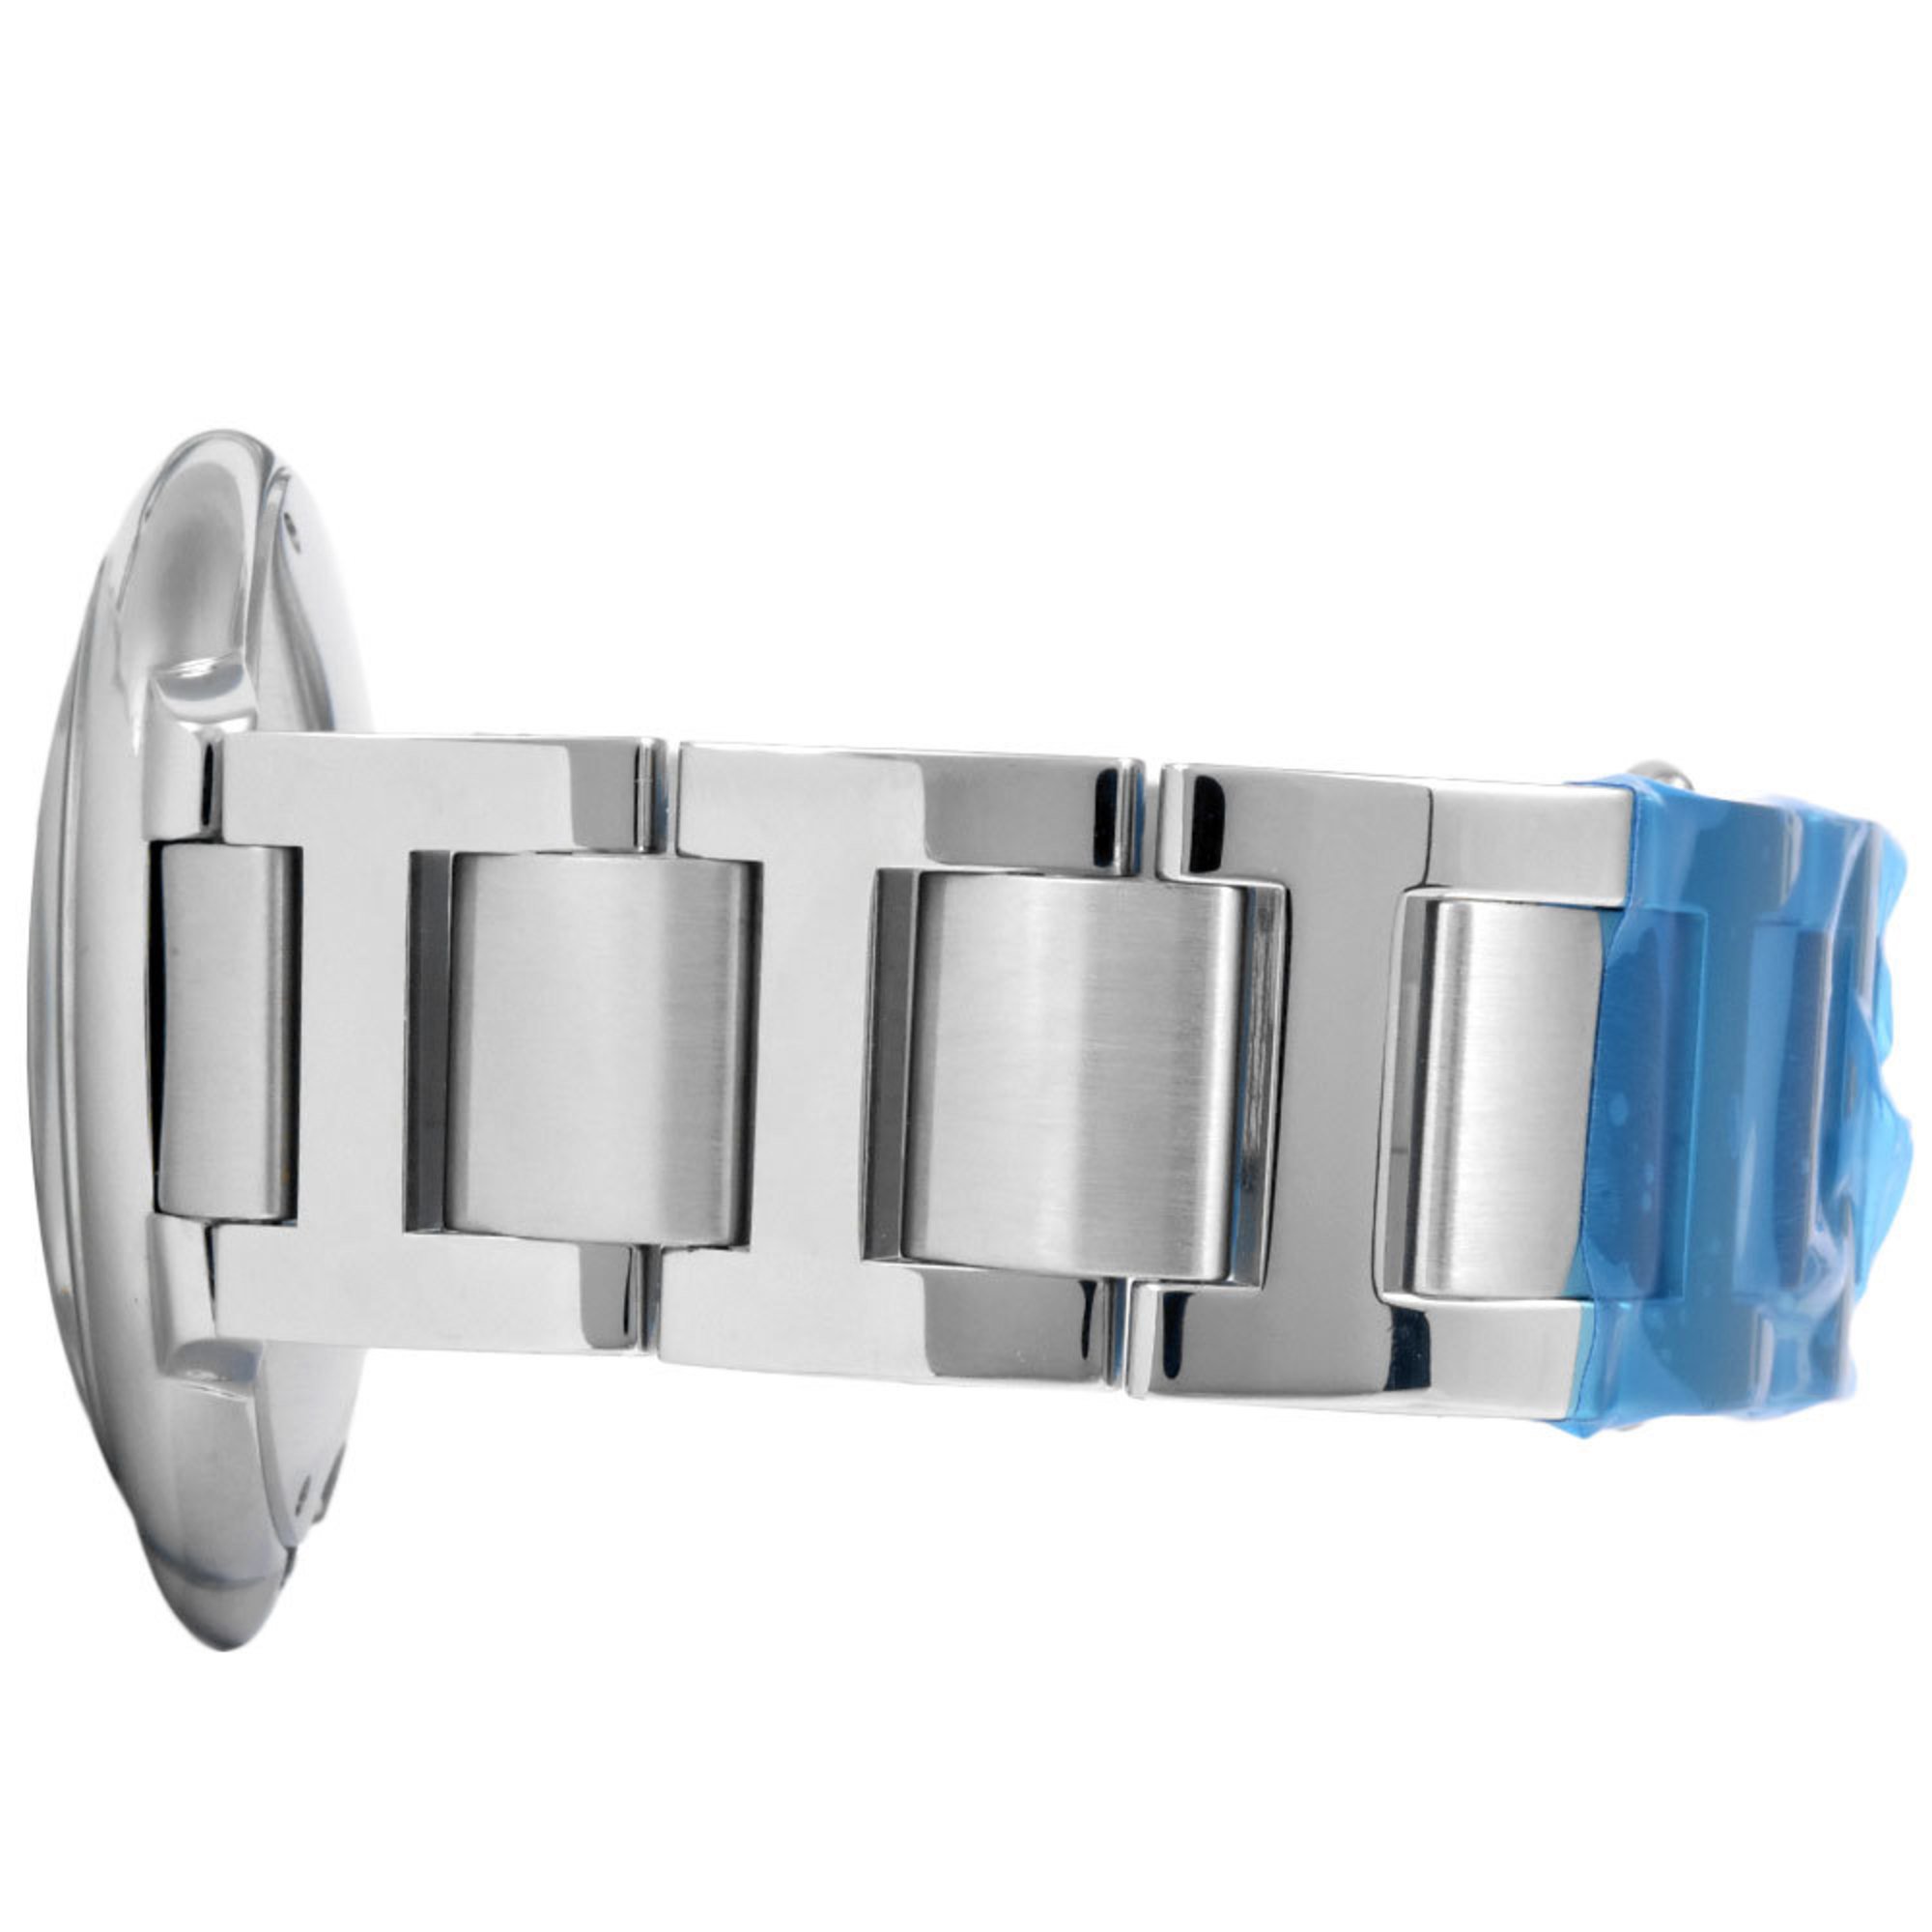 Cartier Ballon Bleu LM Watch, Automatic, Silver Dial, Men's IT3SAIUL9XCG